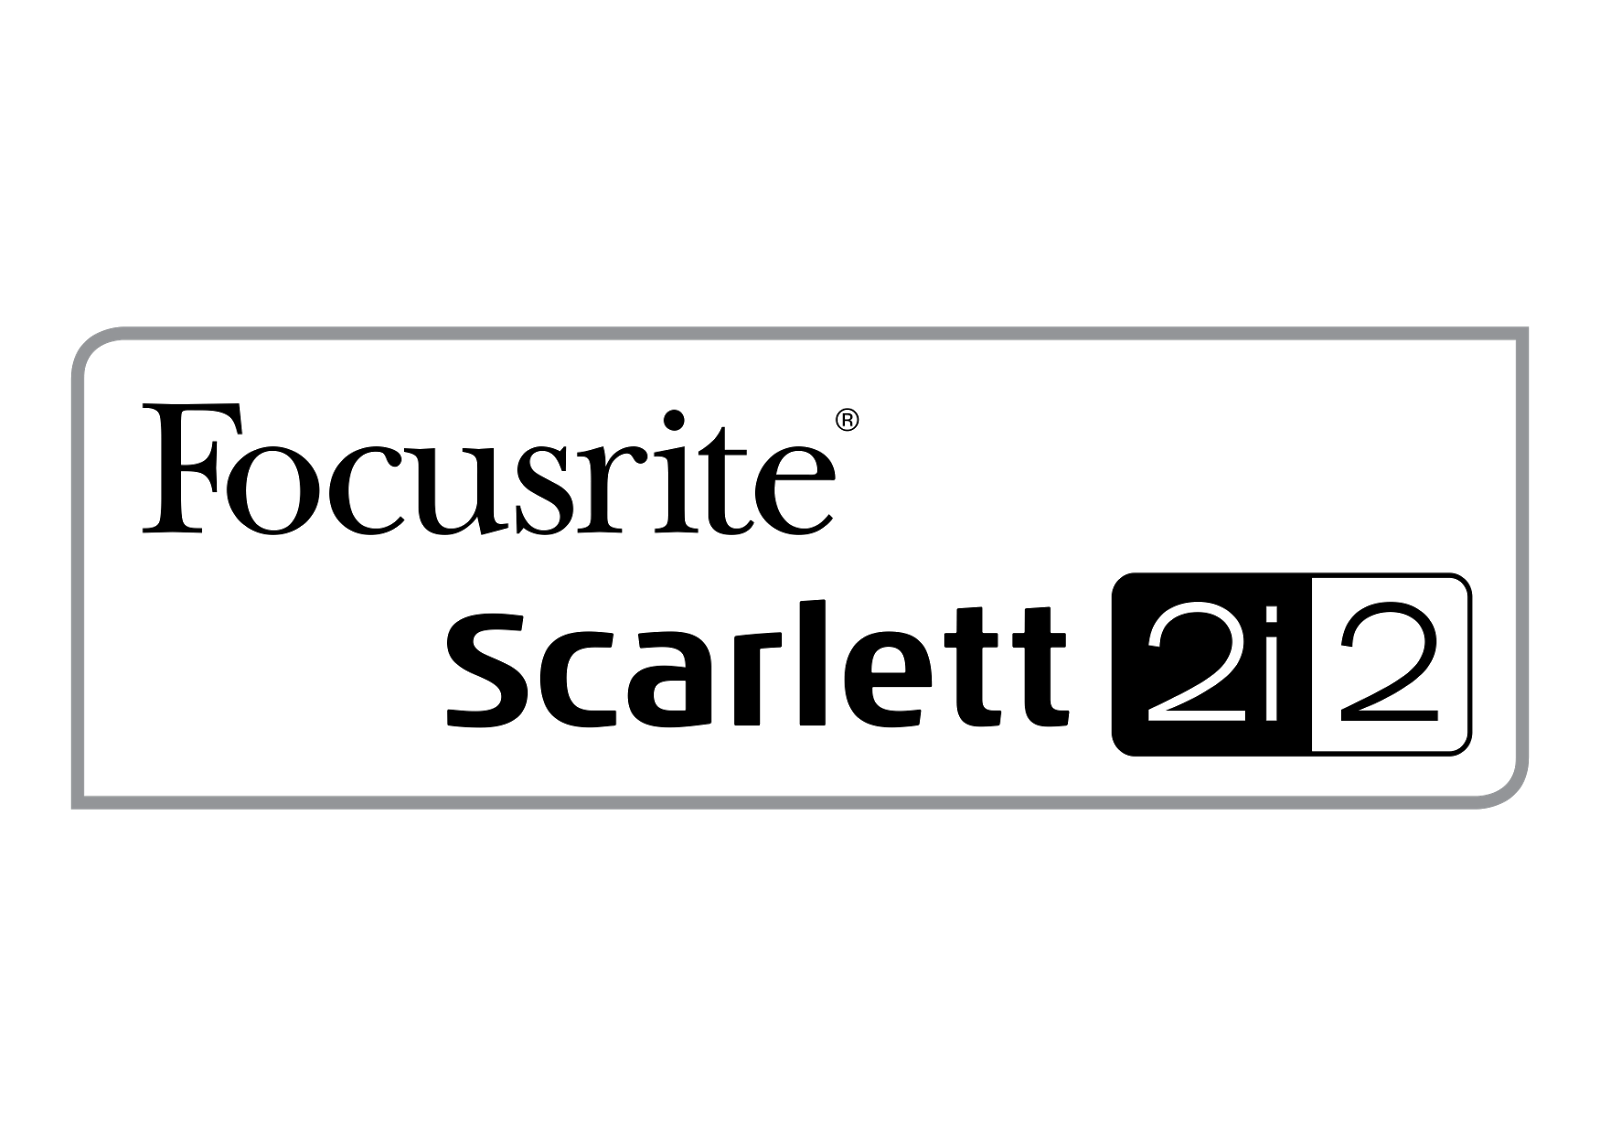 Focusrite Logo - Focusrite Scarlett 2i2 Logo Vector Format Cdr, Ai, Eps, Svg, PDF, PNG